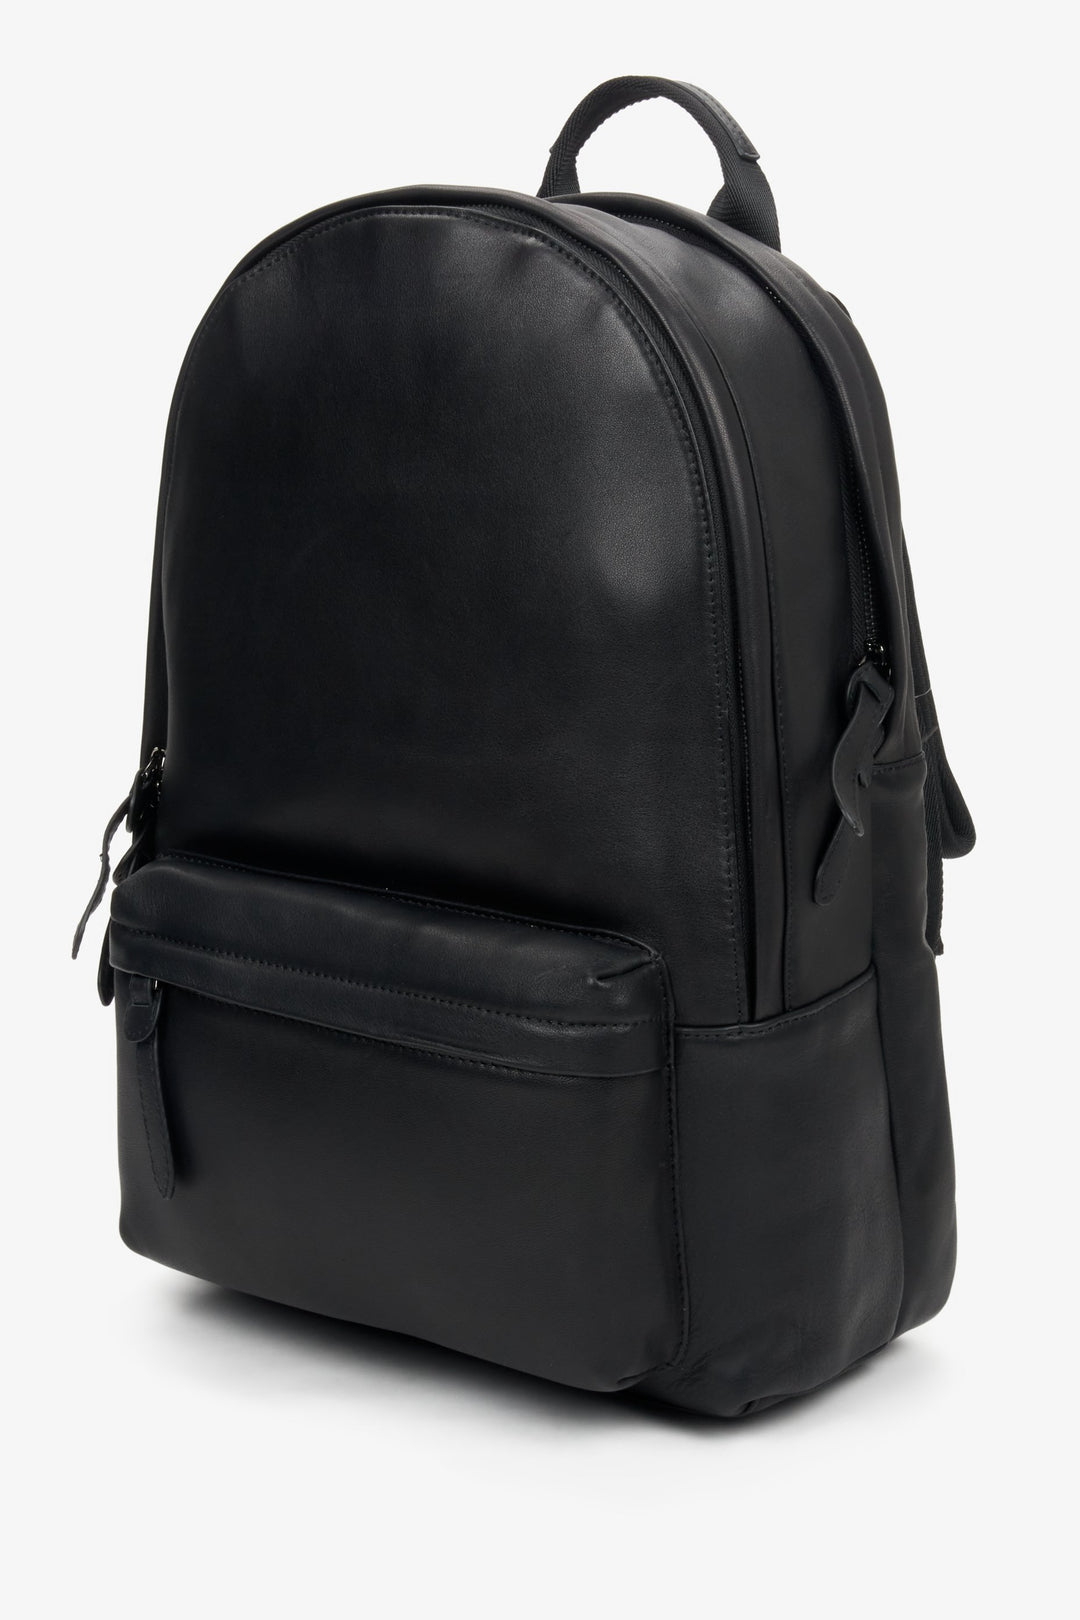 Large, leather men's black backpack by Estro.